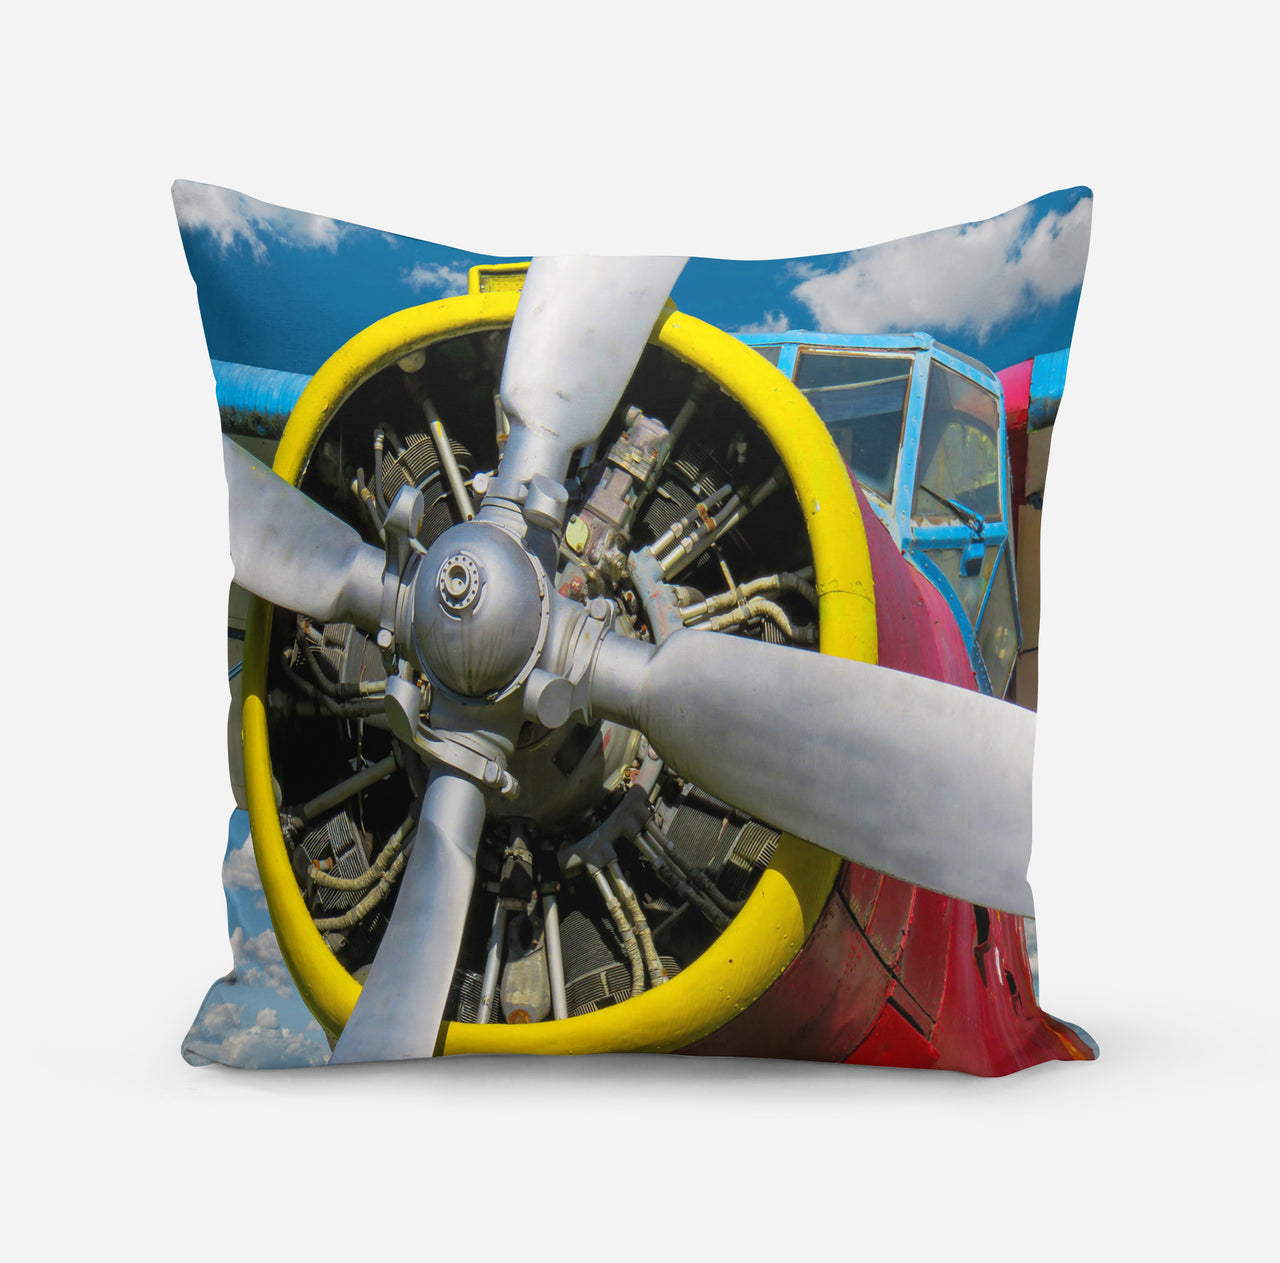 Double-Decker Airplane's Propeller Designed Pillows